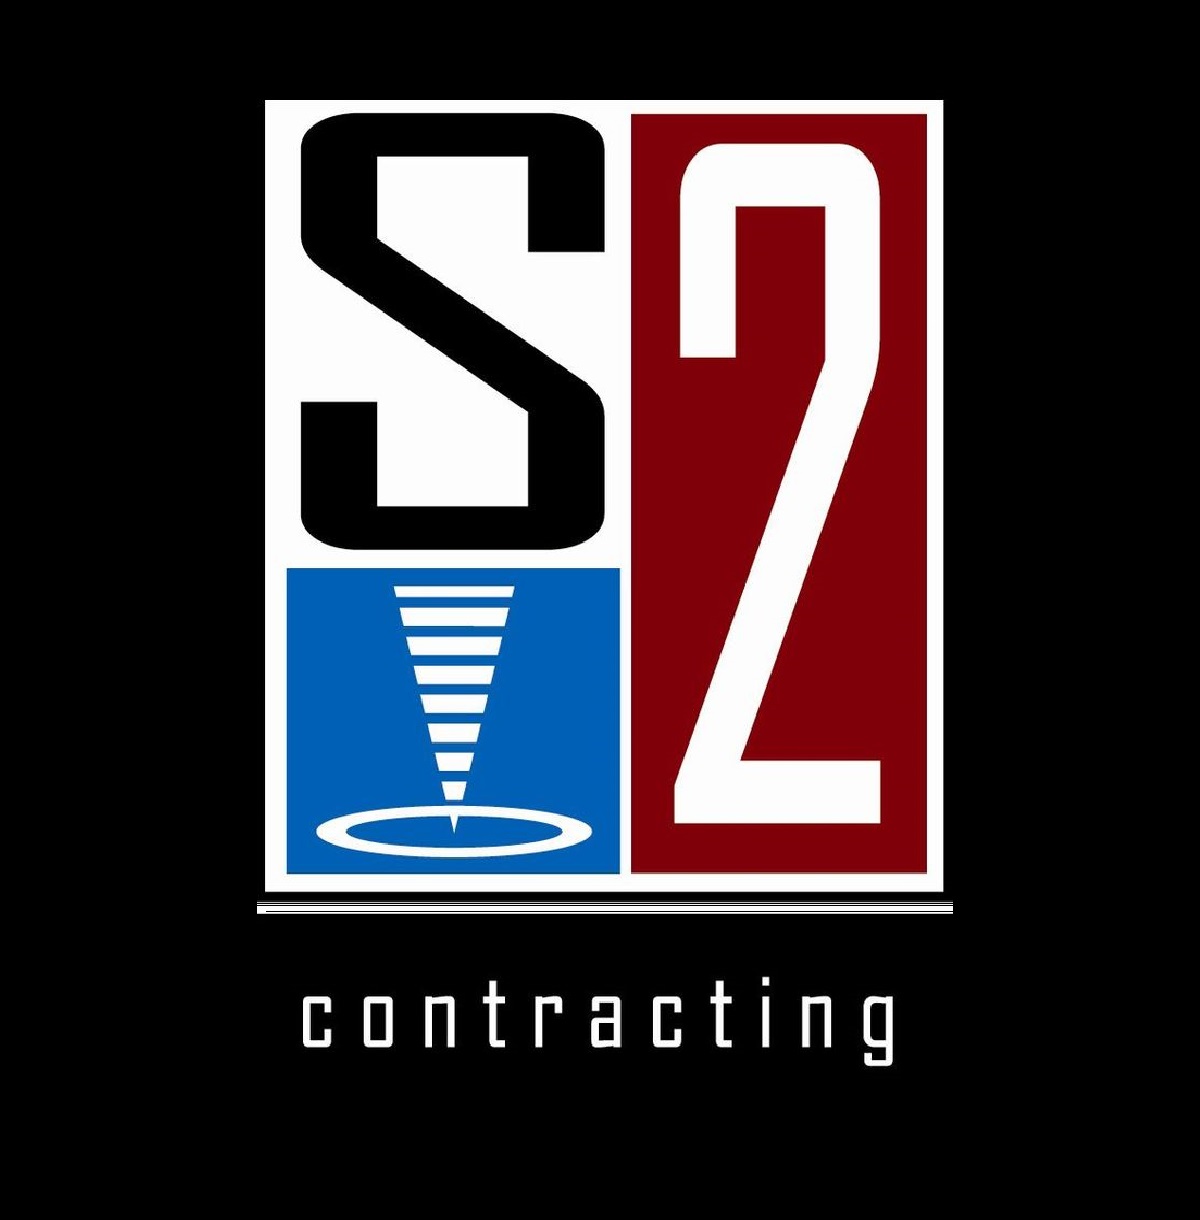 S2A General contracting LLC